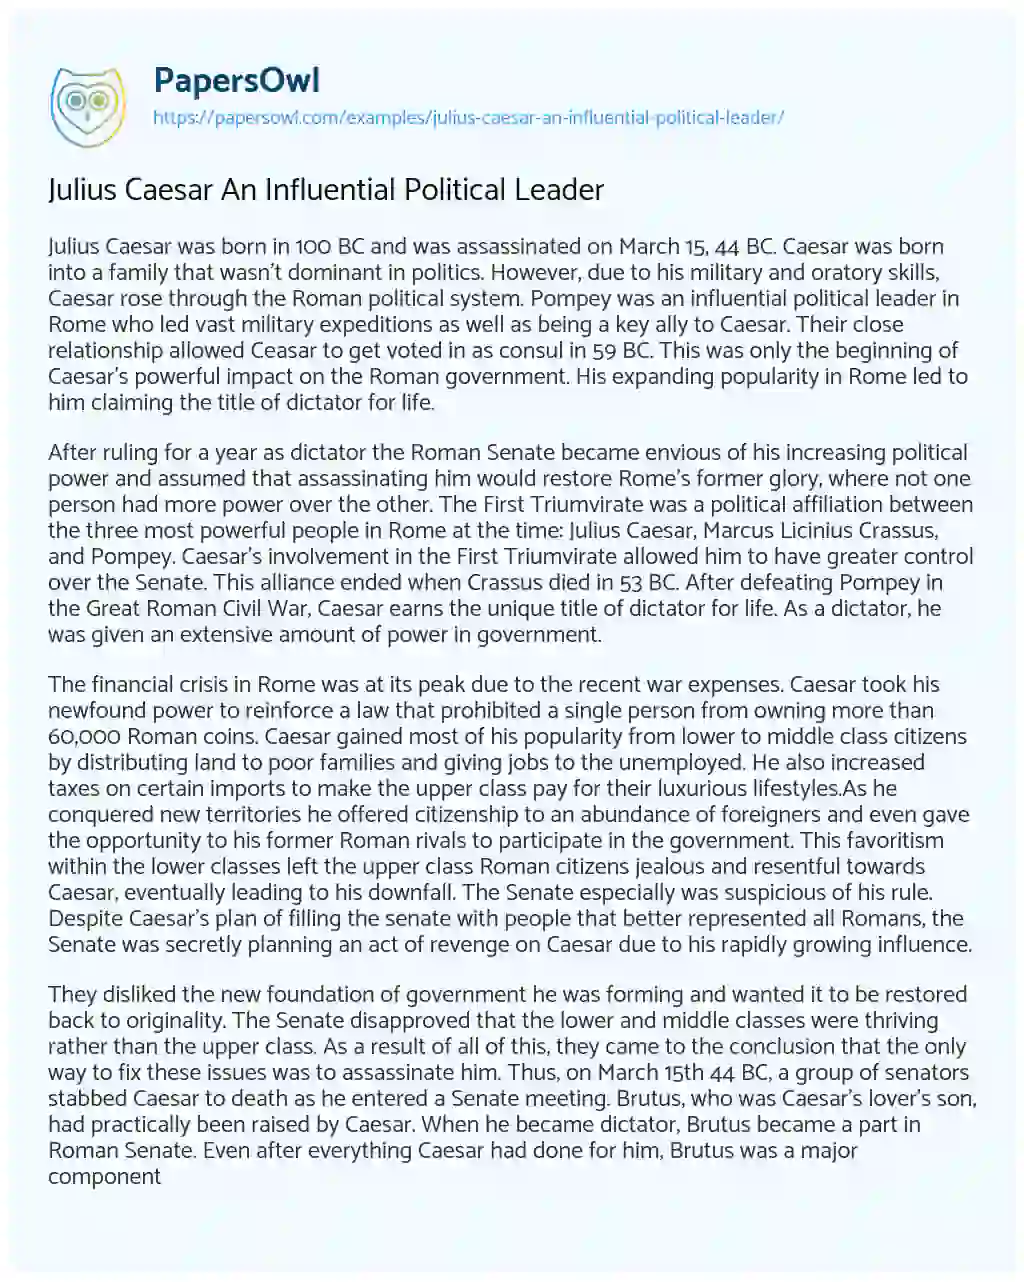 Essay on Julius Caesar an Influential Political Leader